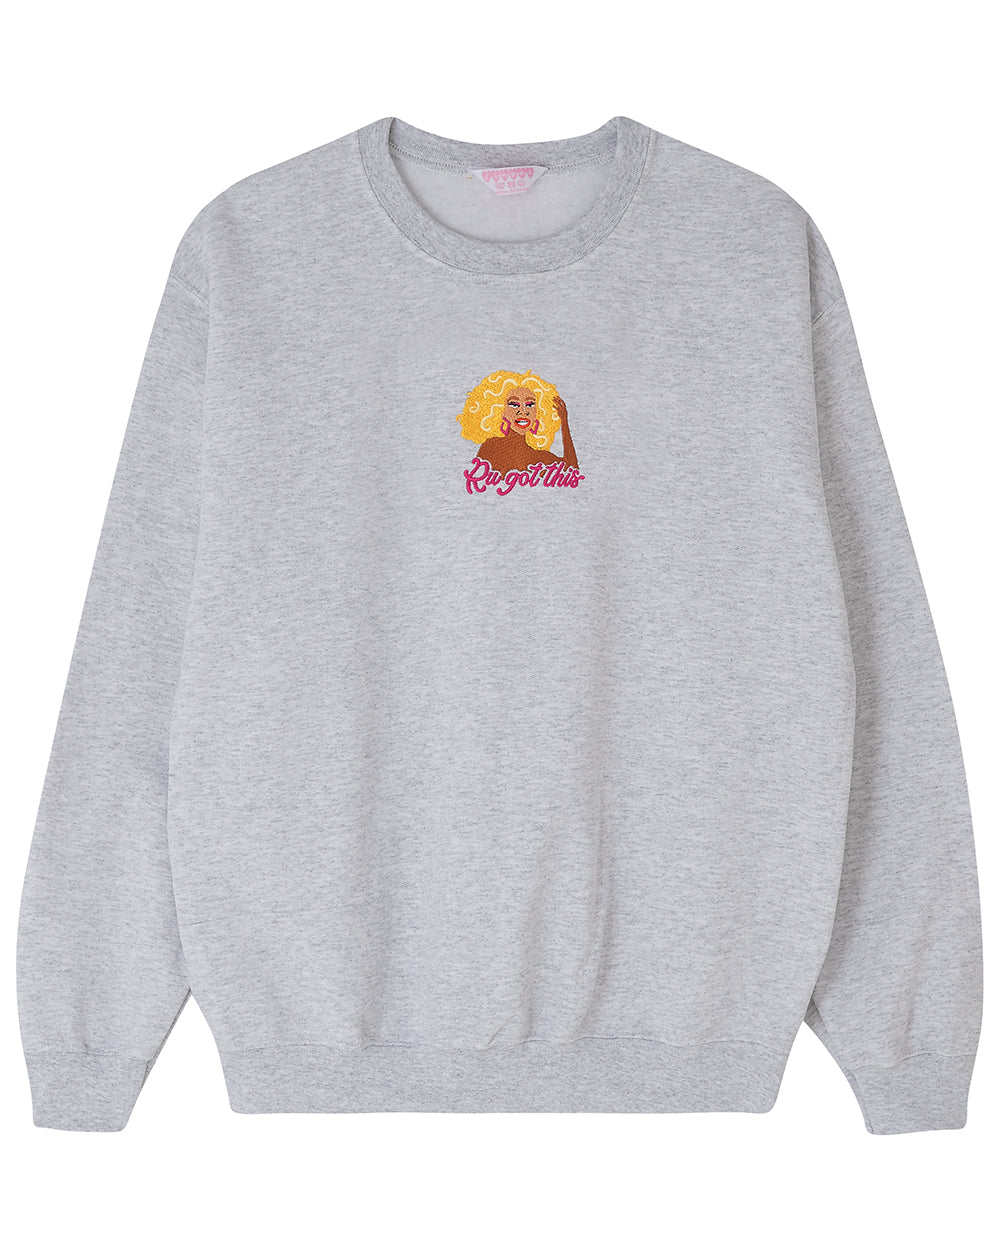 Ru Paul &#39;Ru Got This&#39; Embroidered Sweatshirt